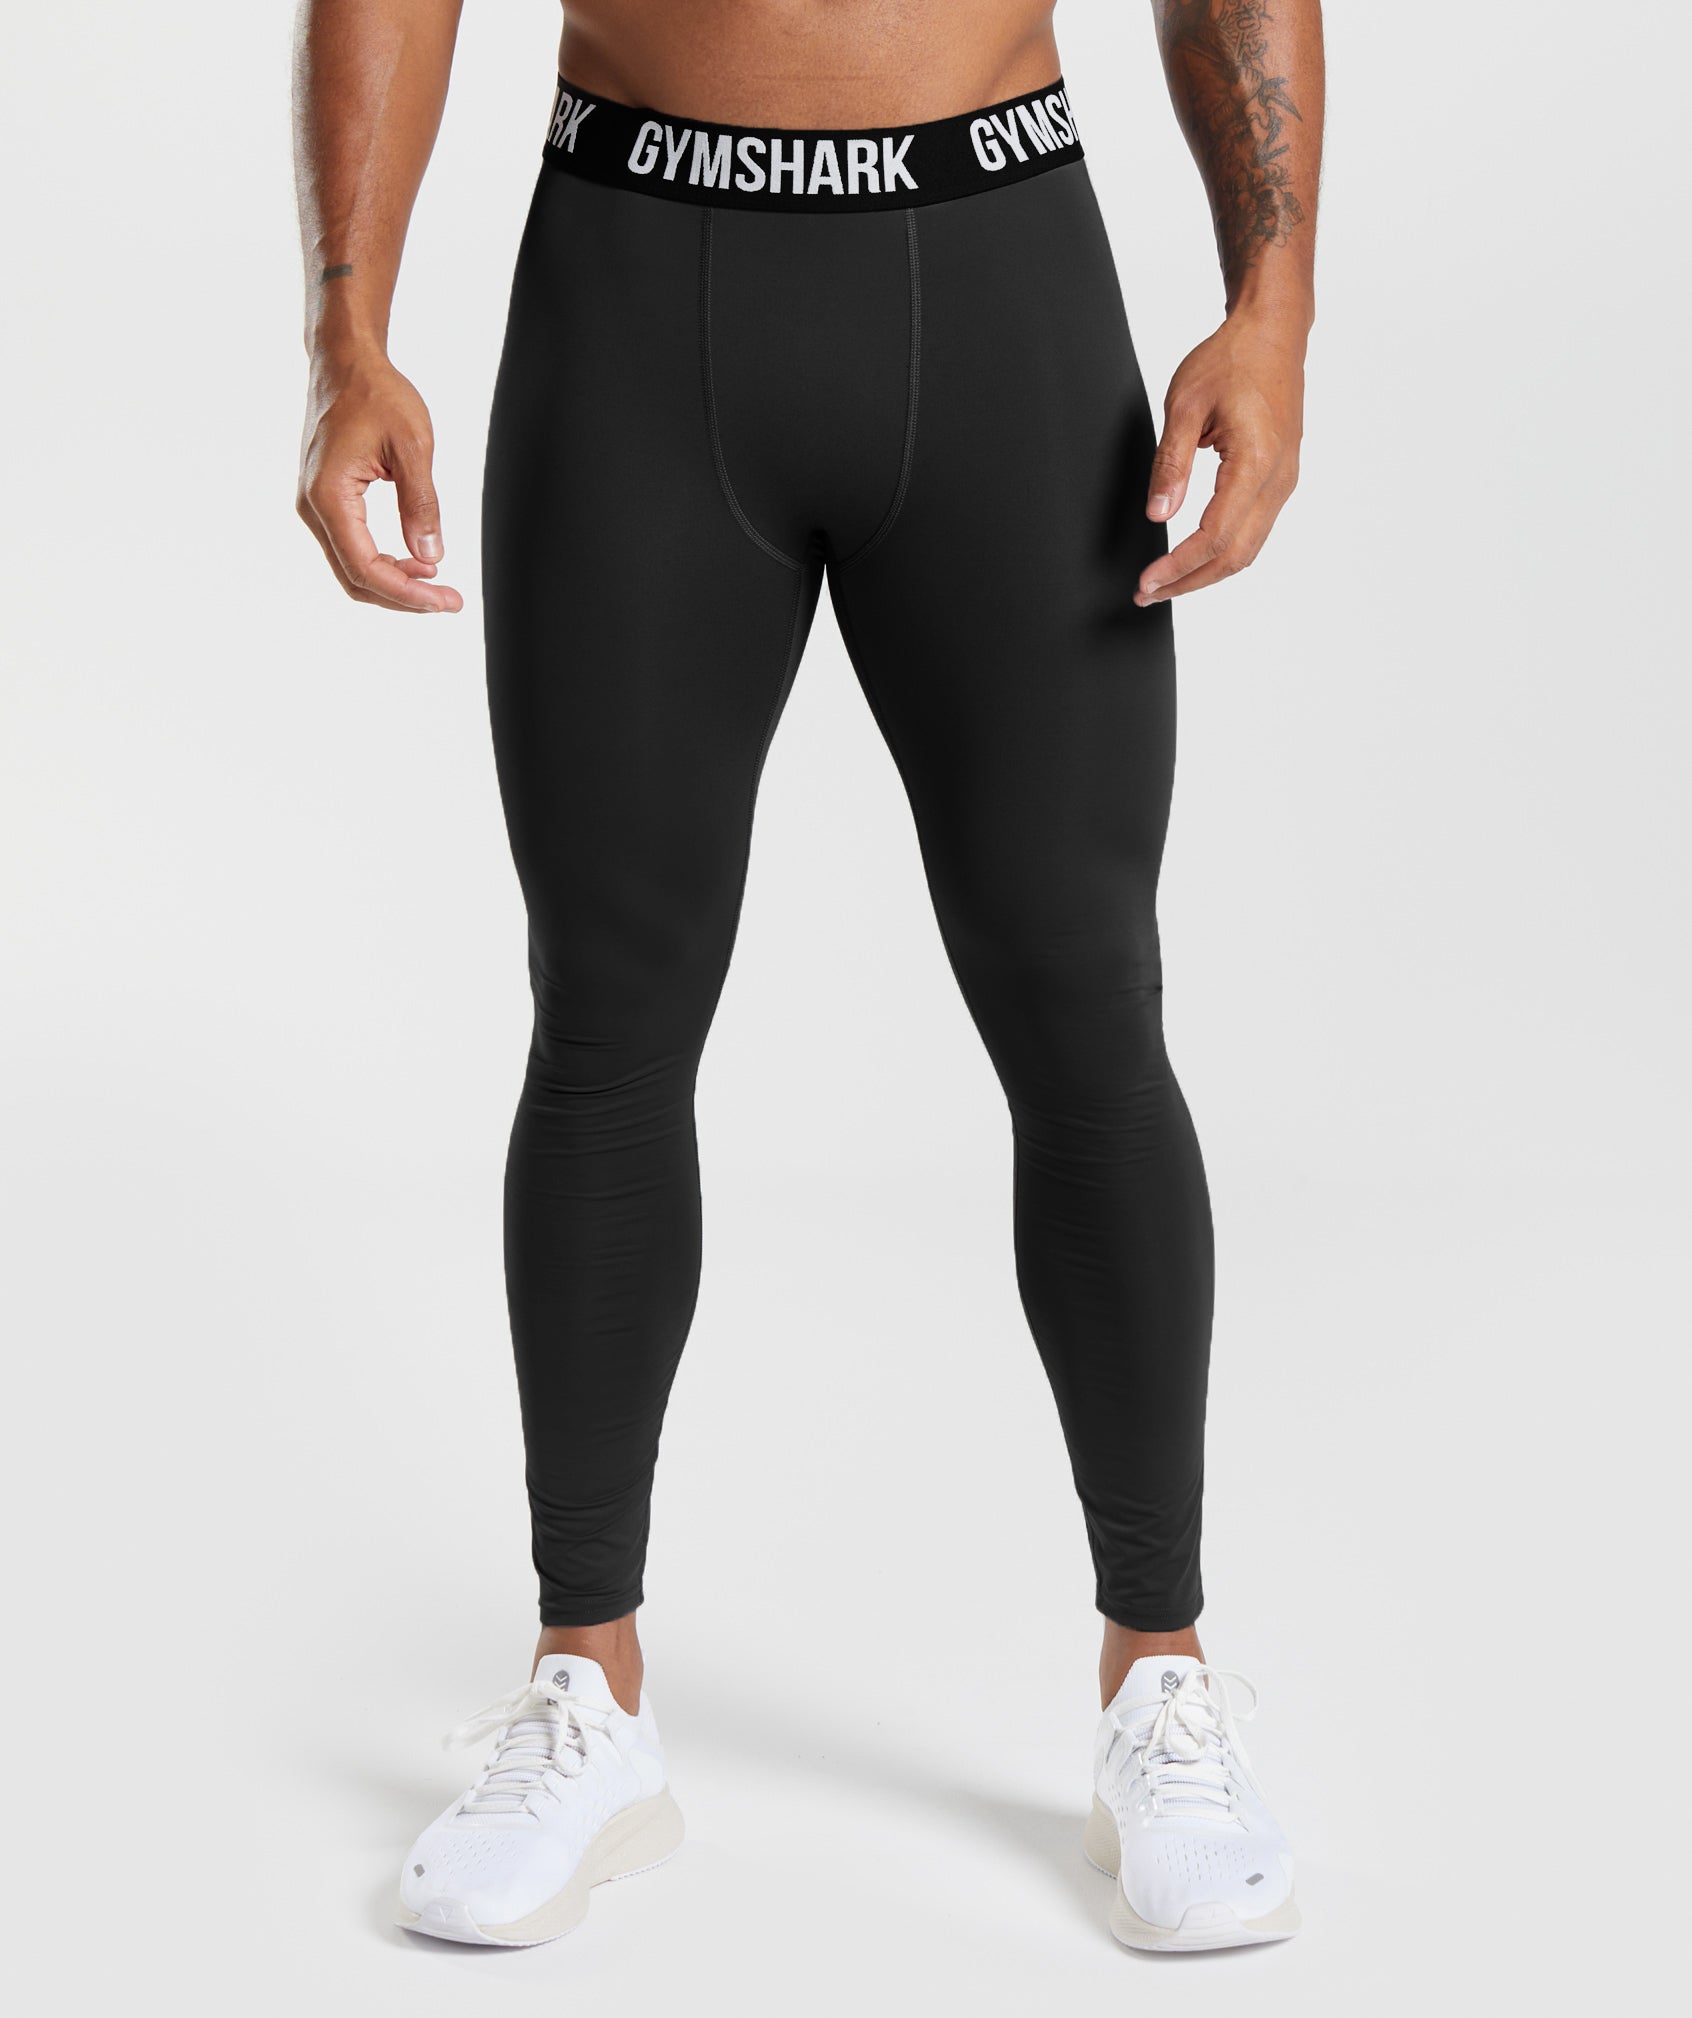 Athletic Works Men's Underwear Compression Pants Black Xl